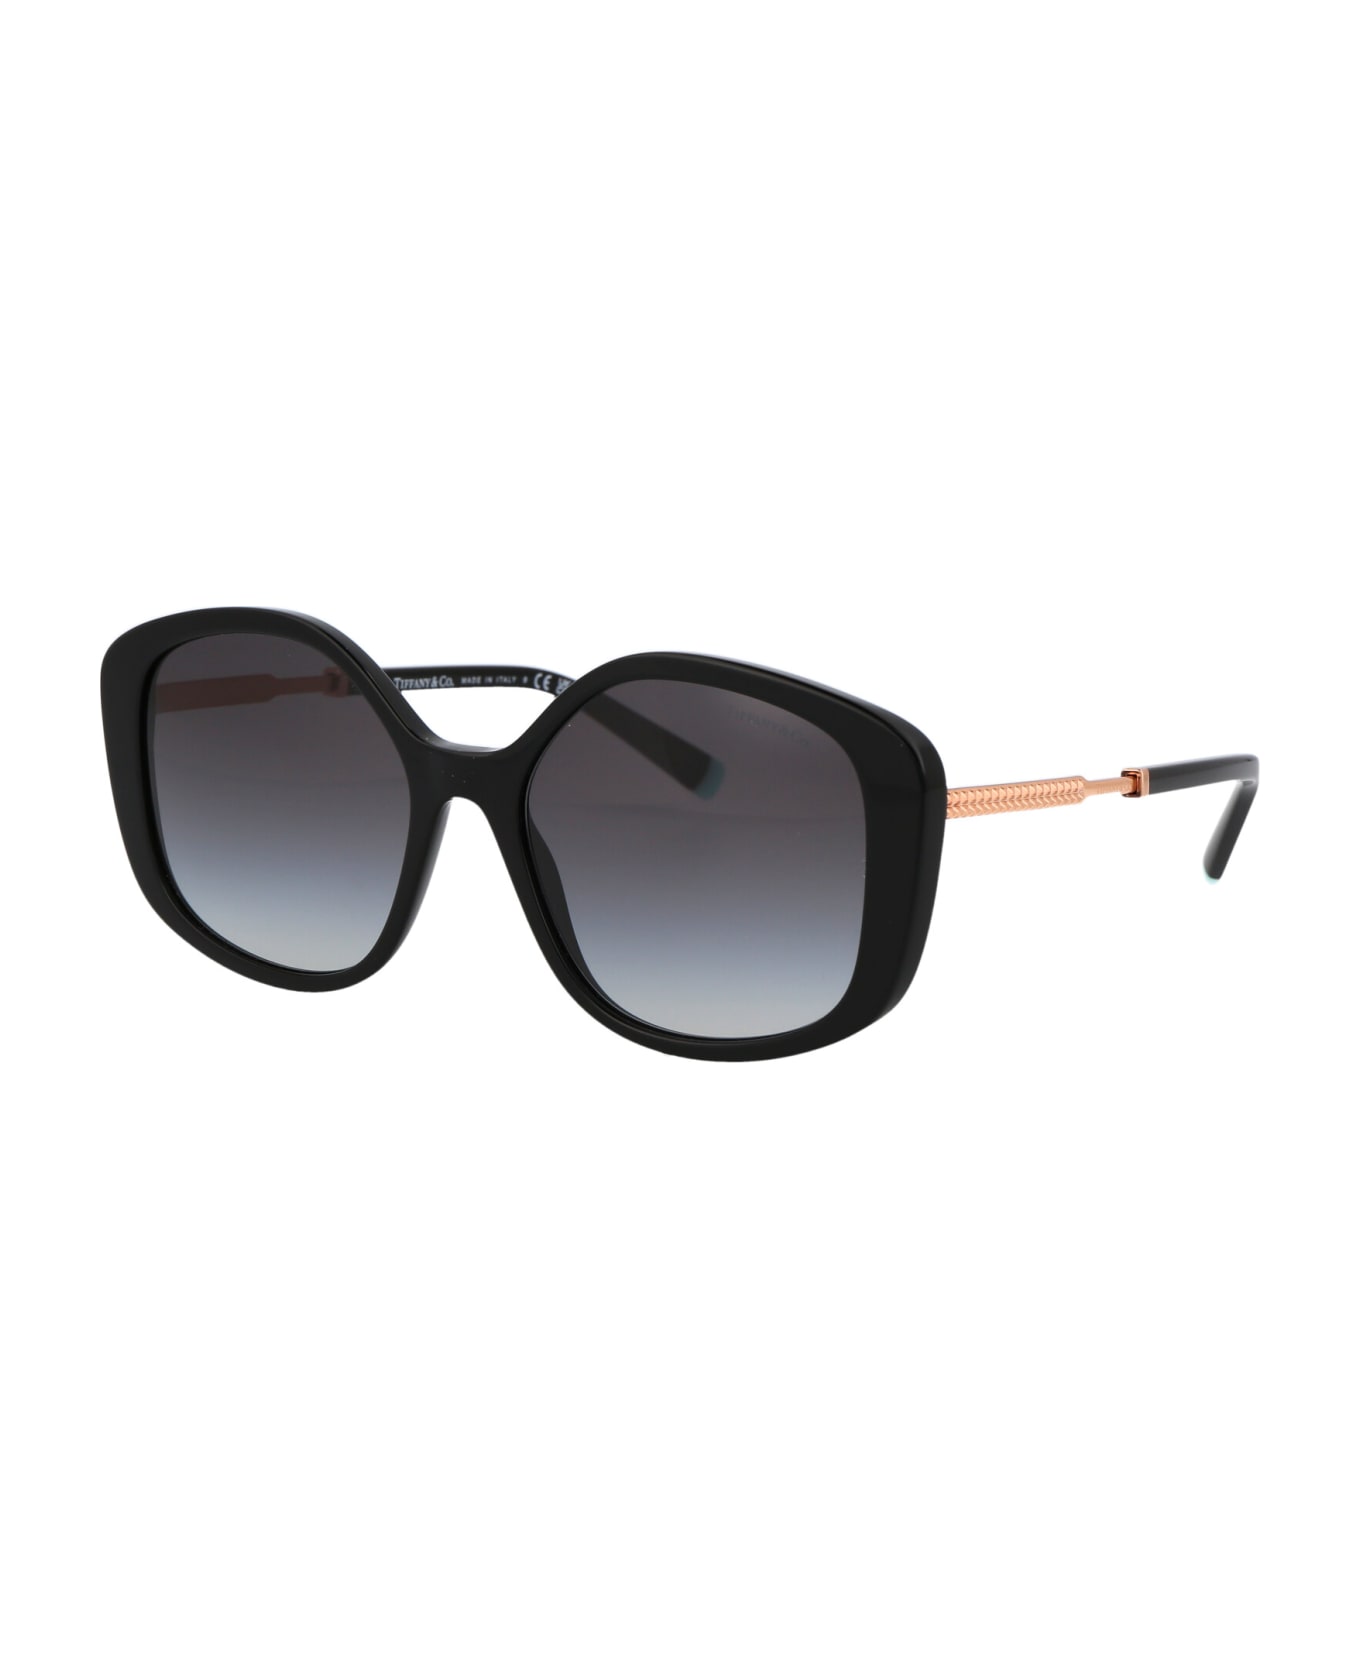 Tiffany & Co. 0tf4192 Sunglasses - 80013C Black